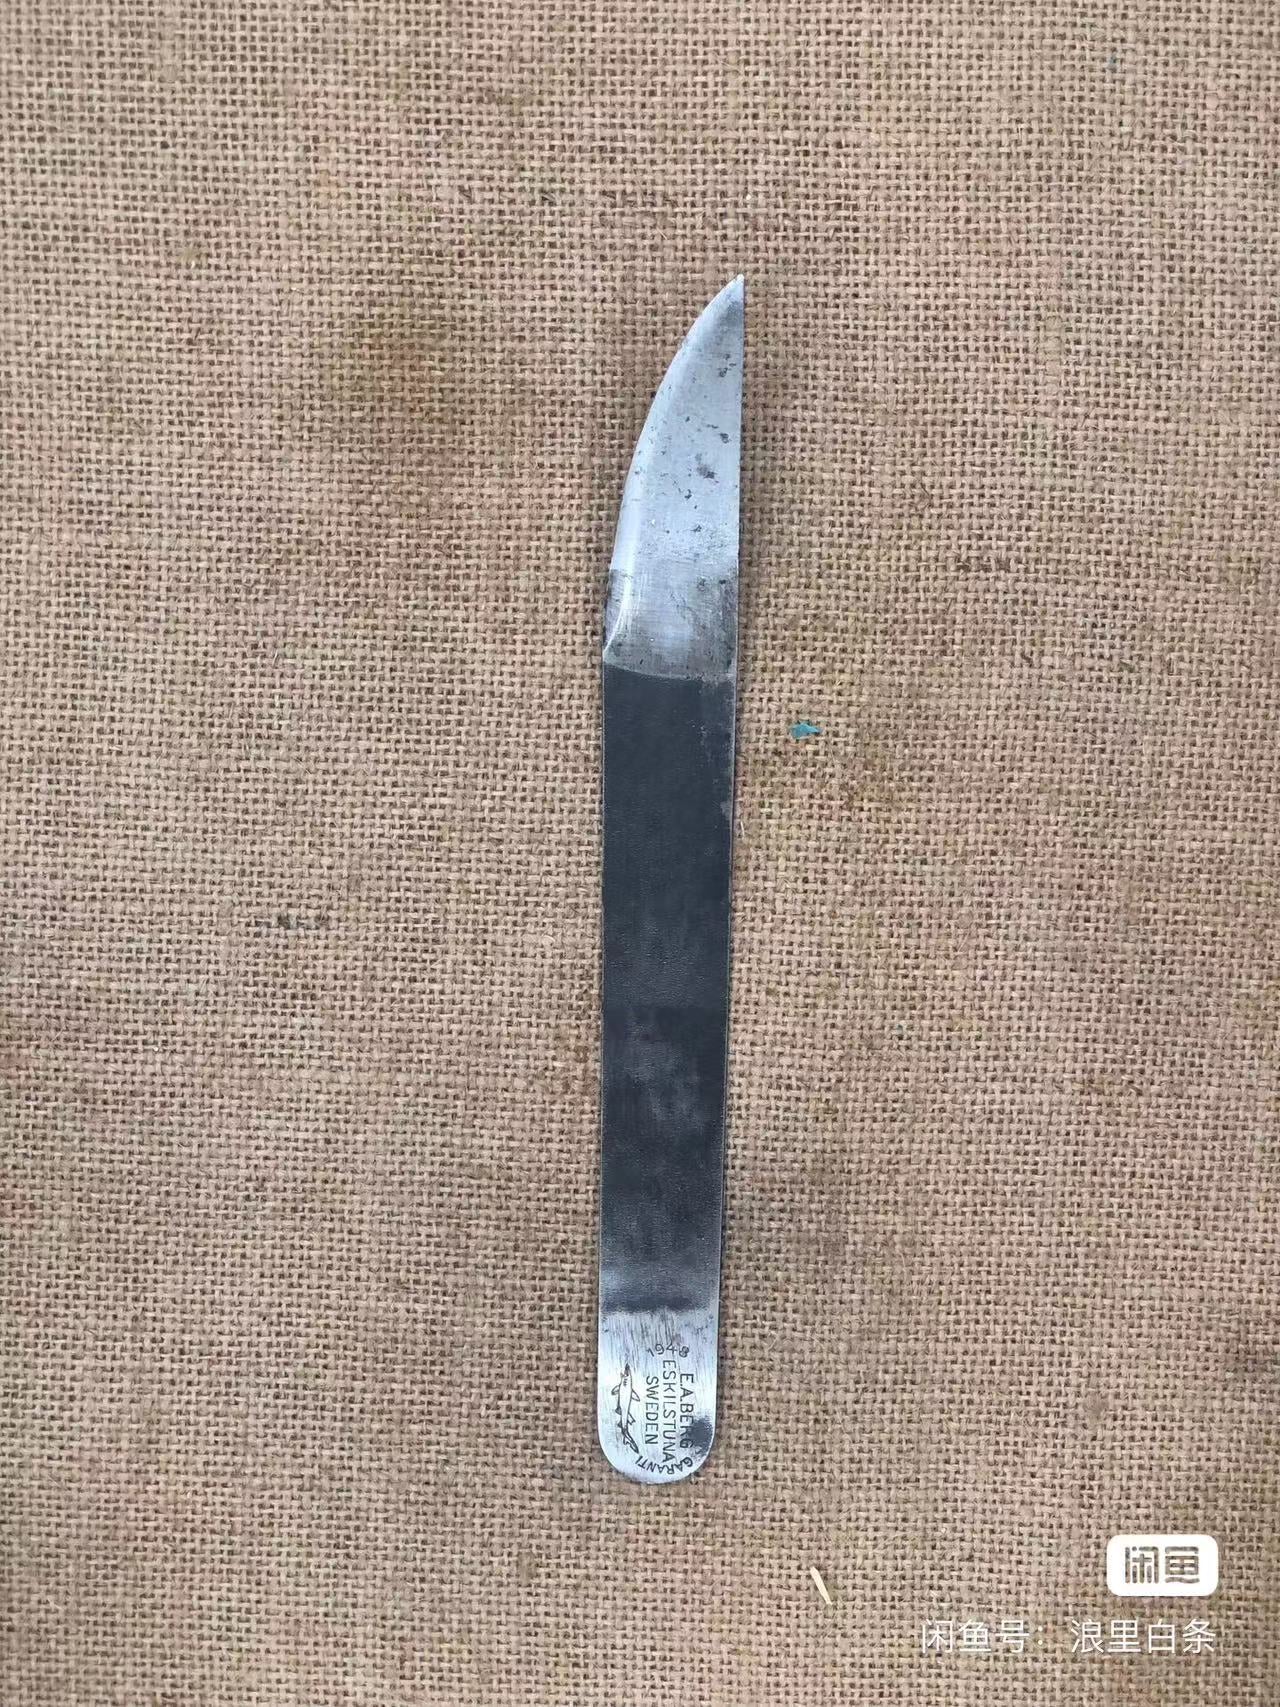 Erik Anton Berg Shoemaker's knife